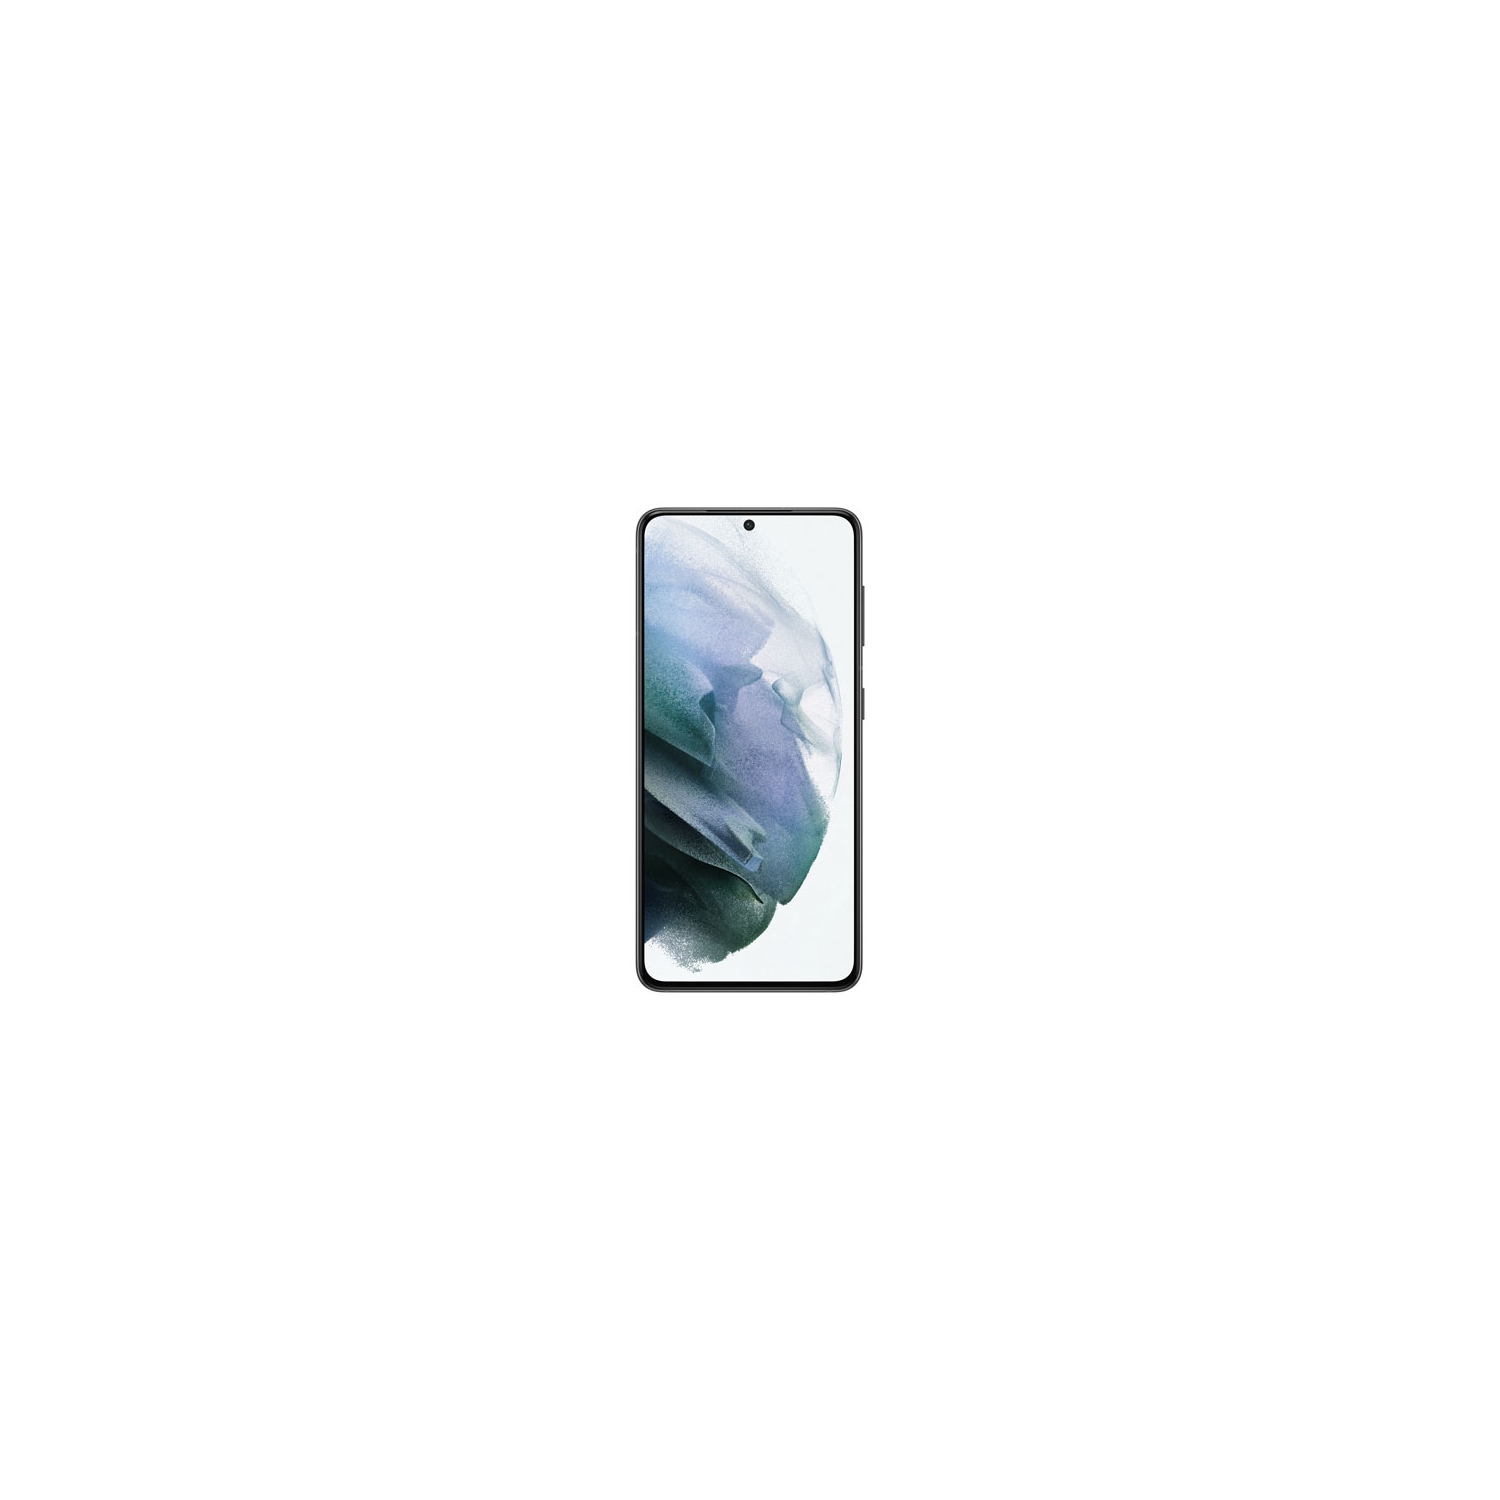 Samsung Galaxy S21 5G 256GB - Phantom Grey - Unlocked - Open Box